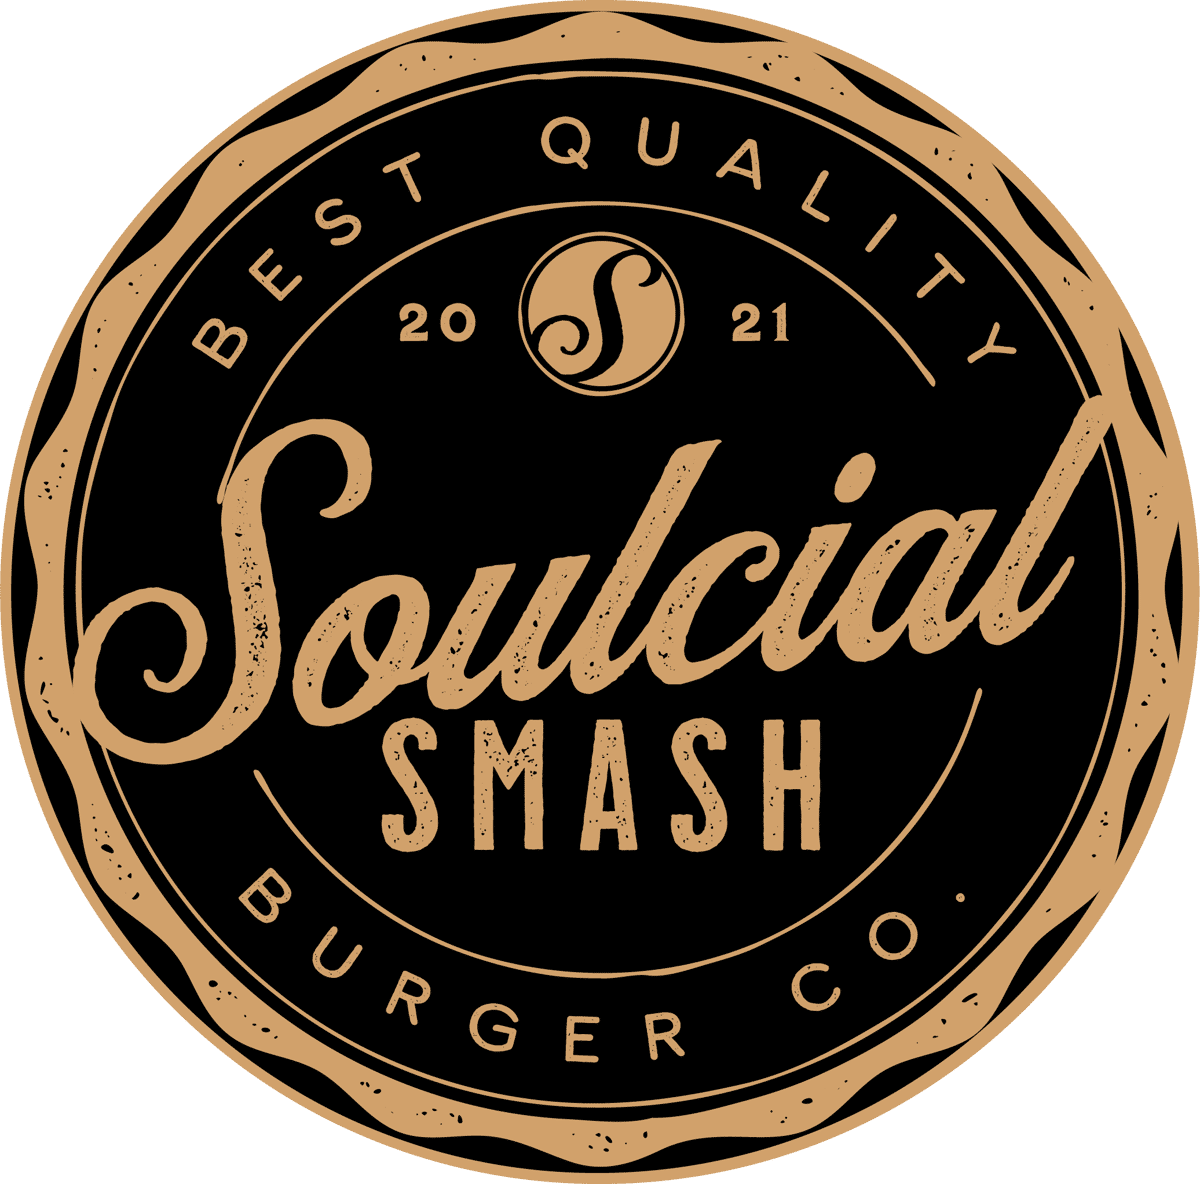 Soulcial Smash Burger Co. Logo